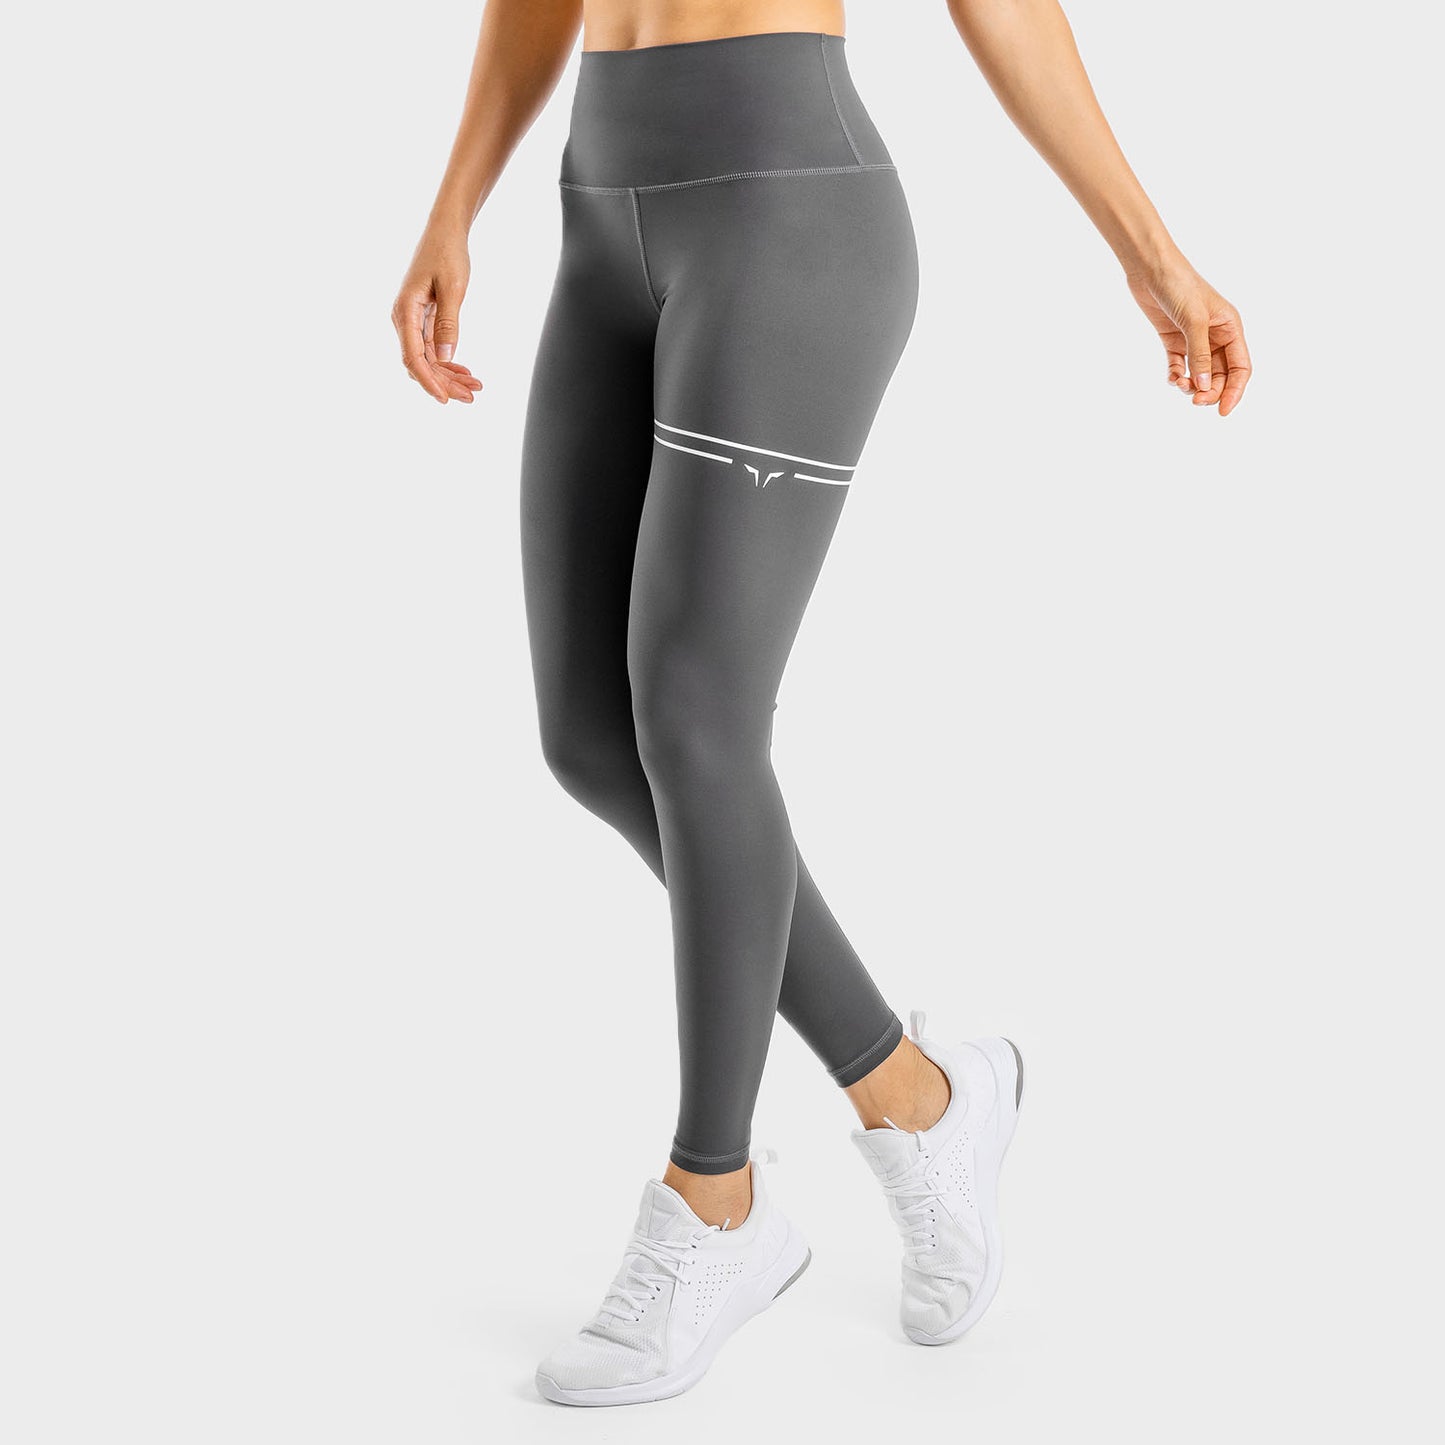 squatwolf-workout-clothes-flux-leggings-charcoal-gym-leggings-for-women